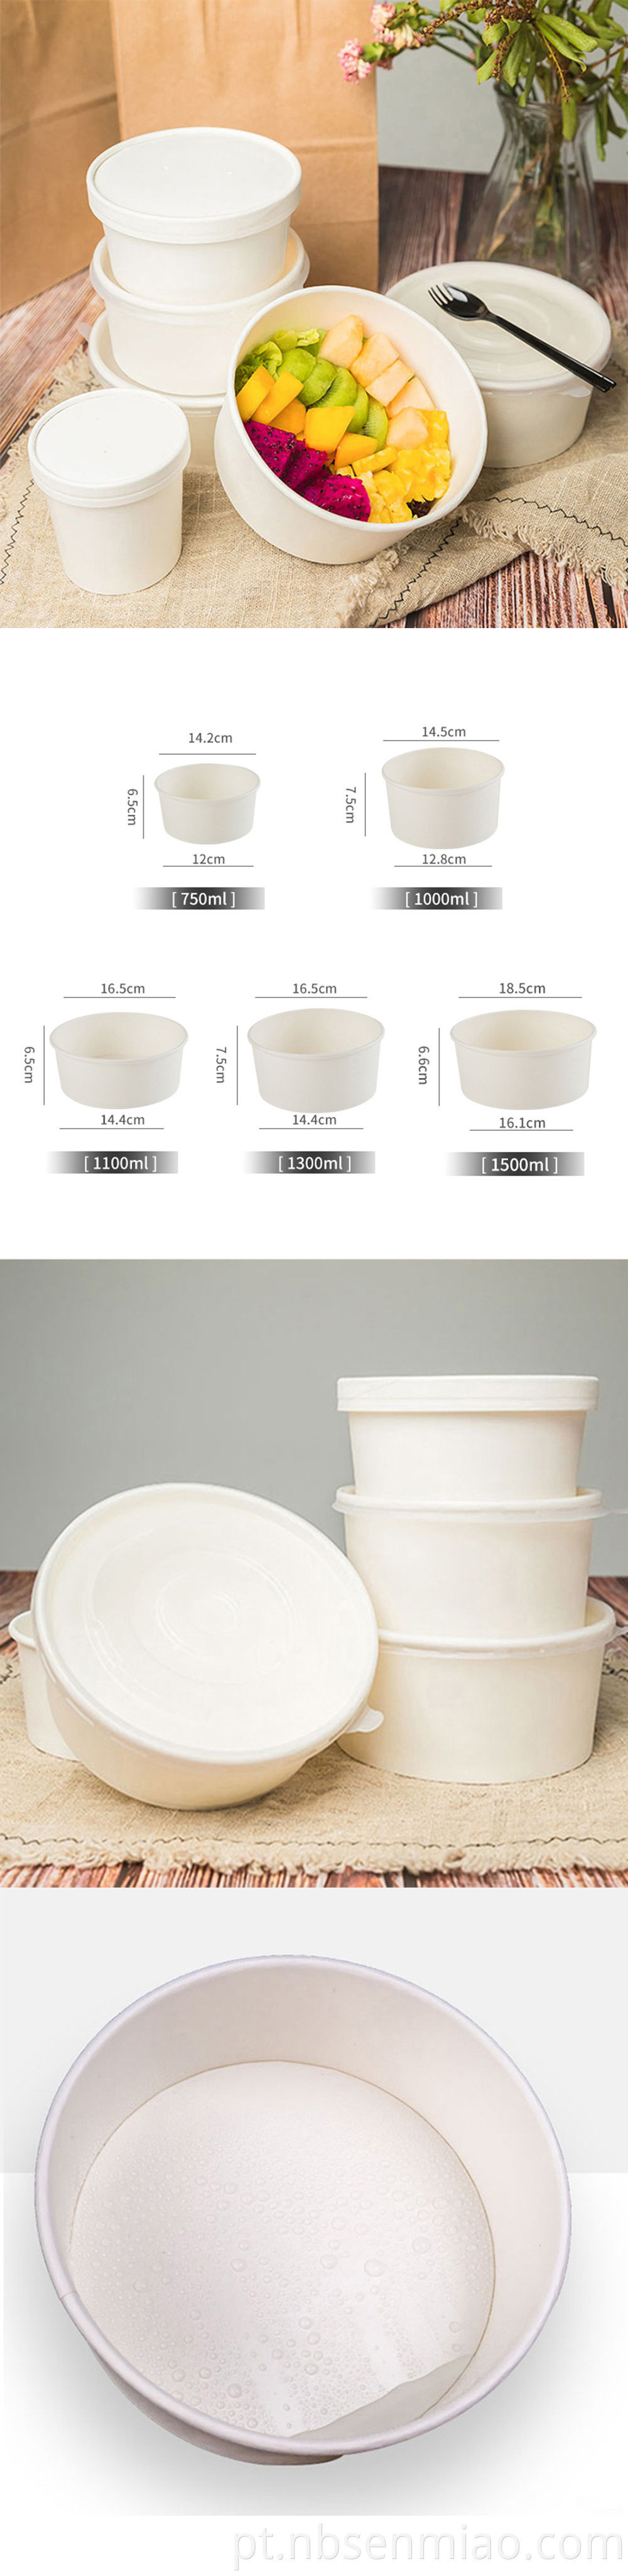 mini ice cream cups bowls